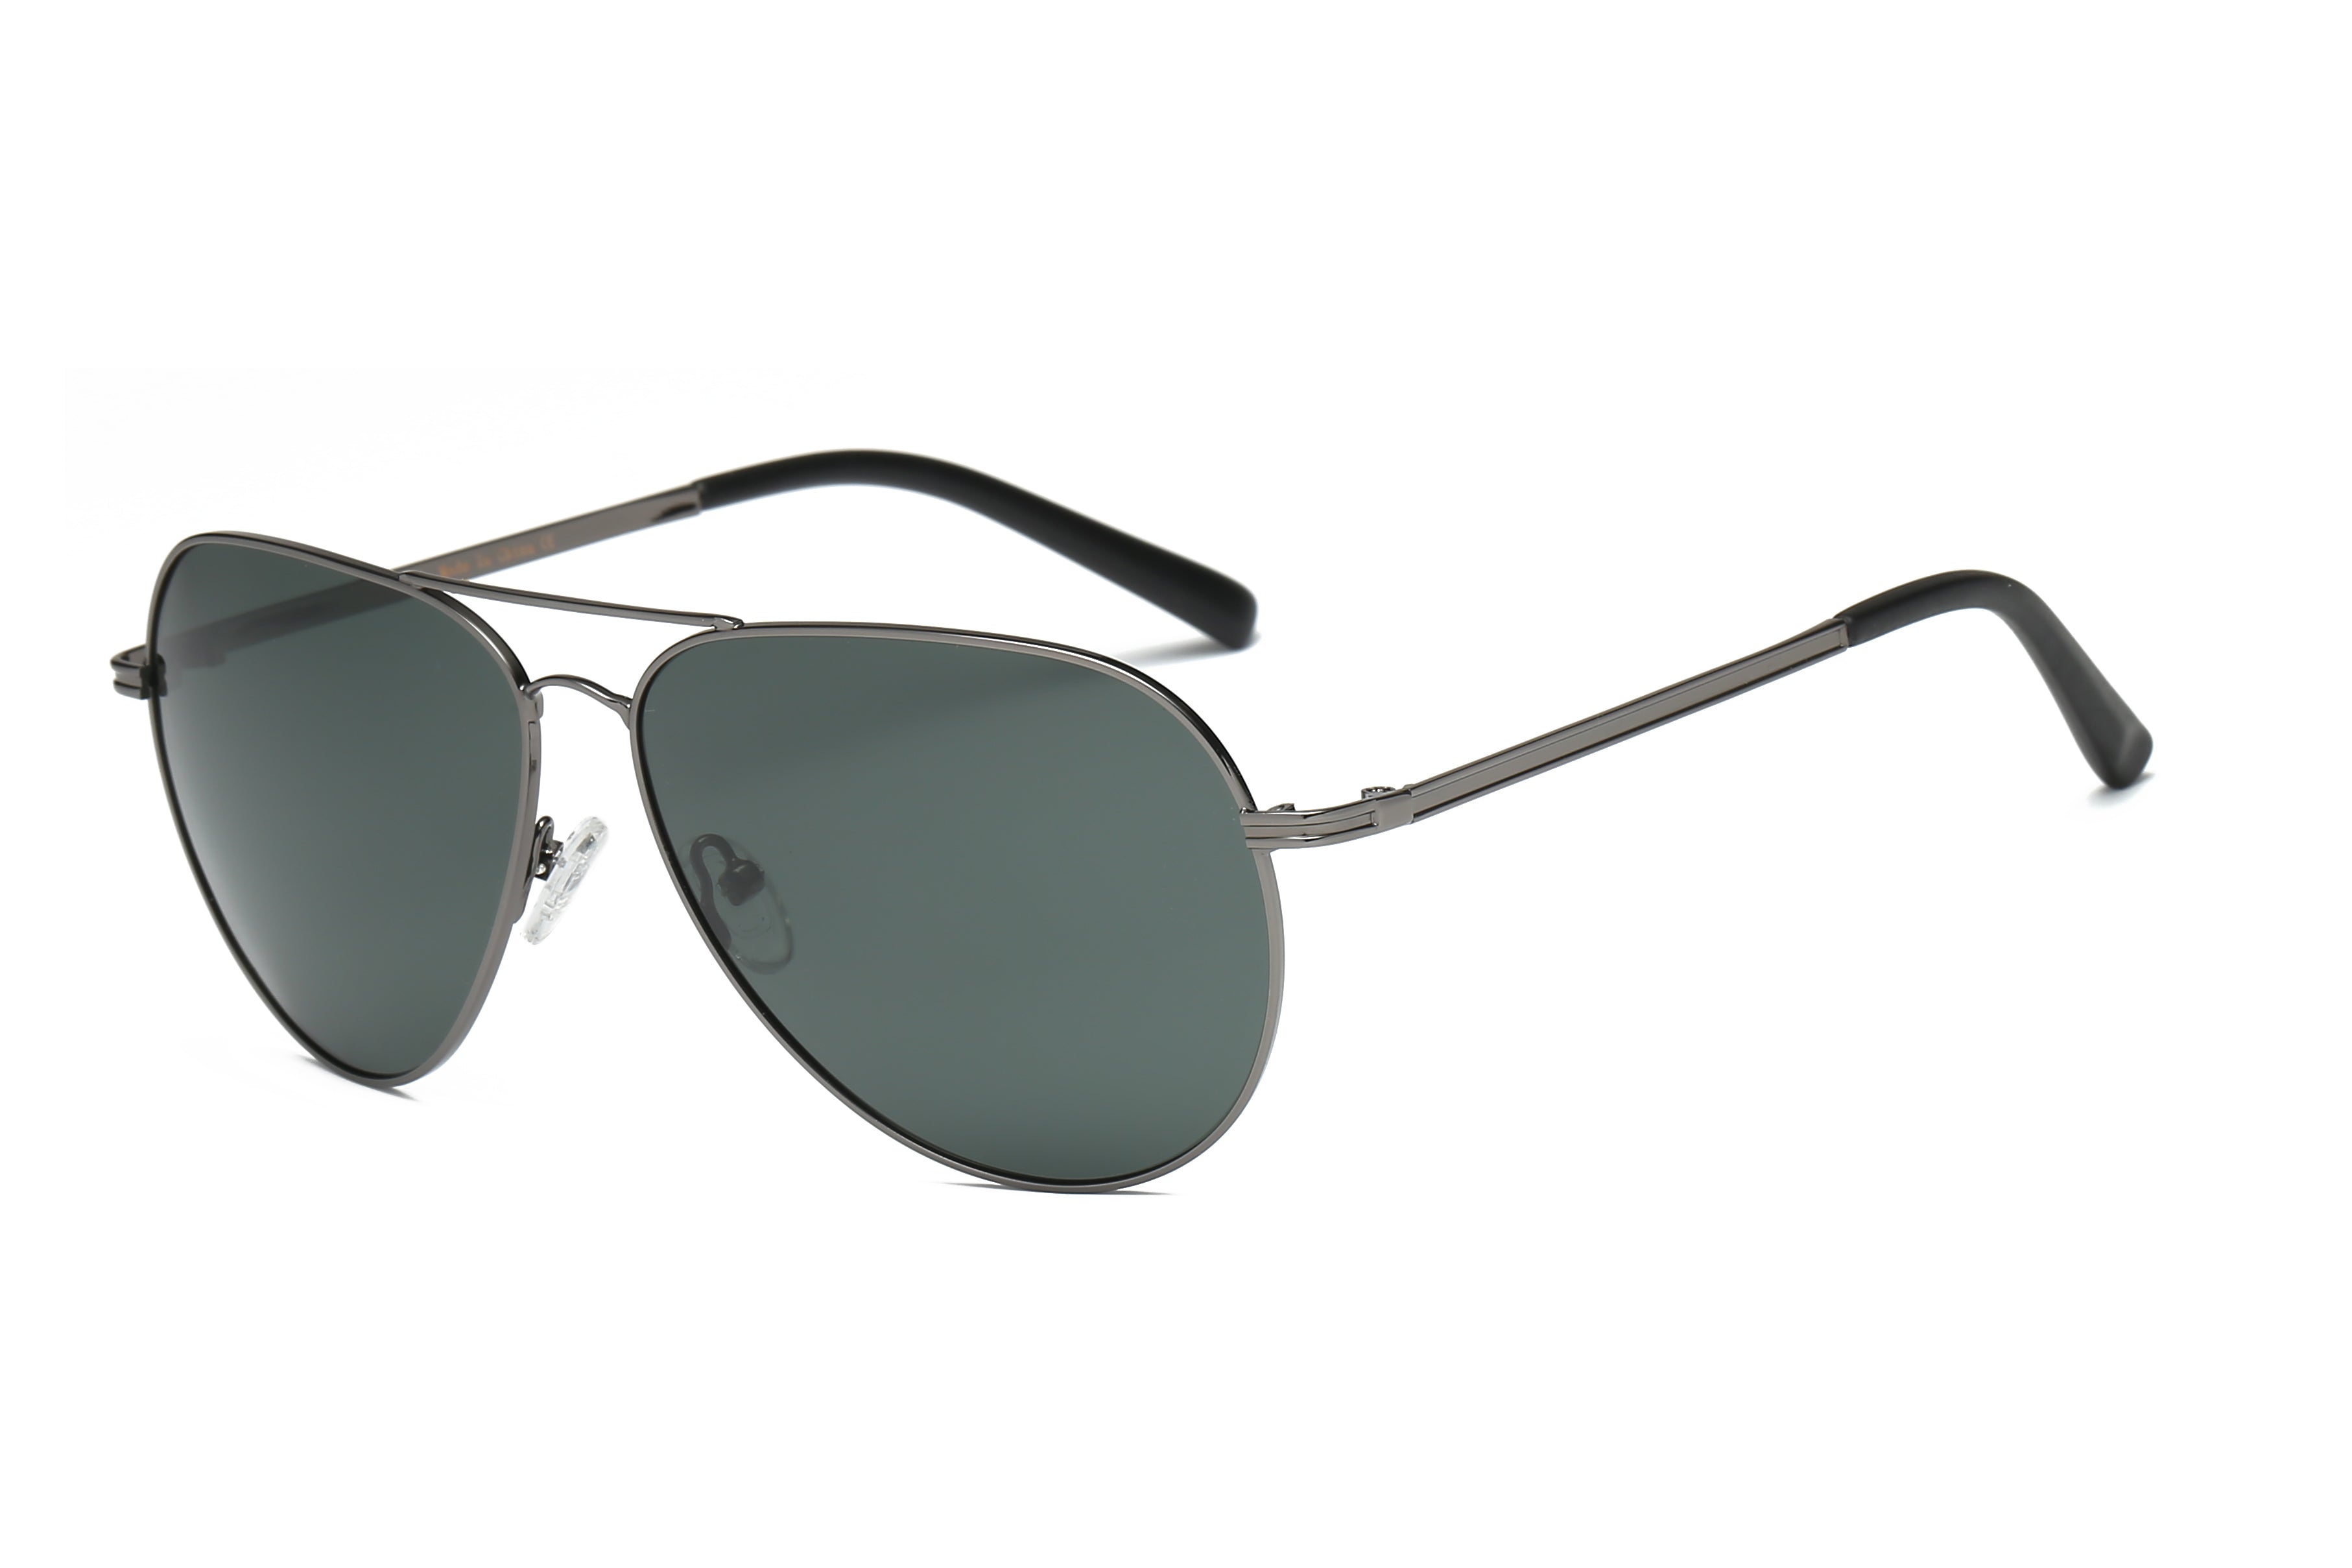 P4004 - Metal Classic Polarized Aviator Sunglasses Olive/Silver